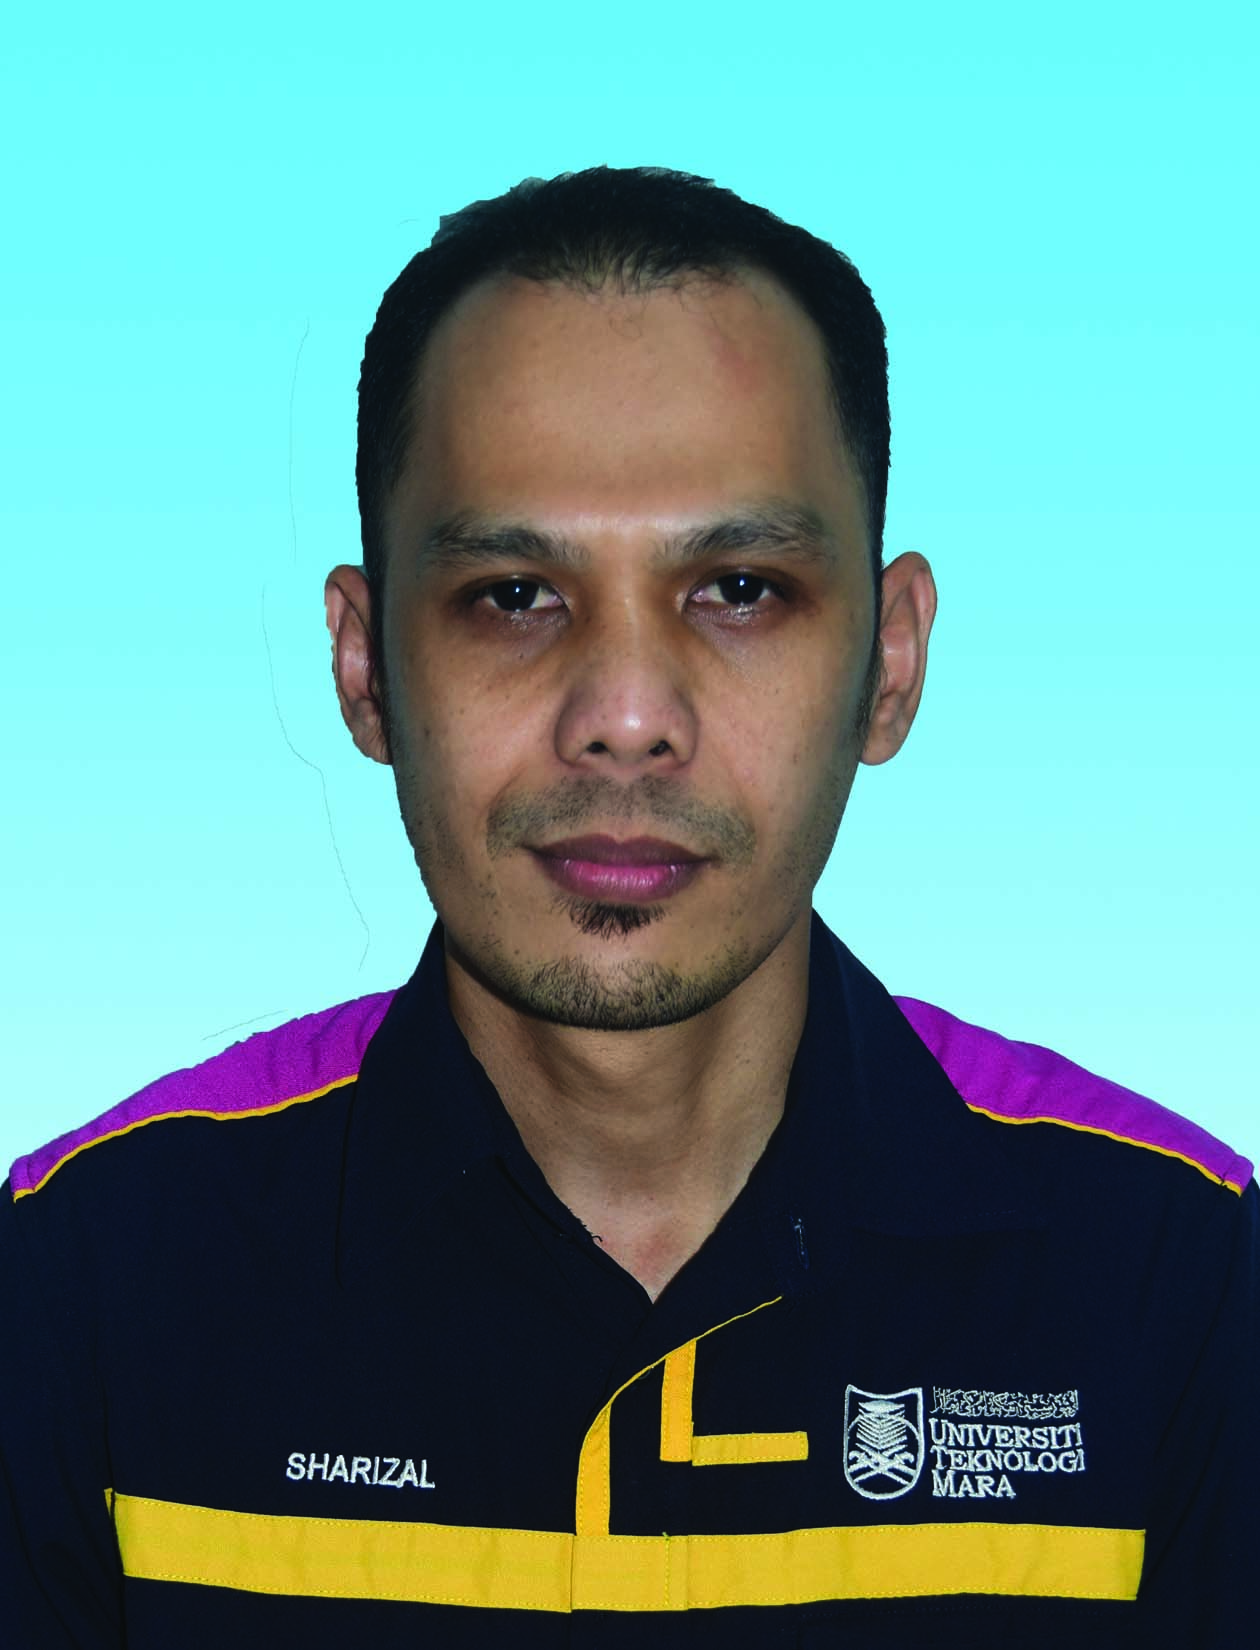 Mohd Sharizal Ismail